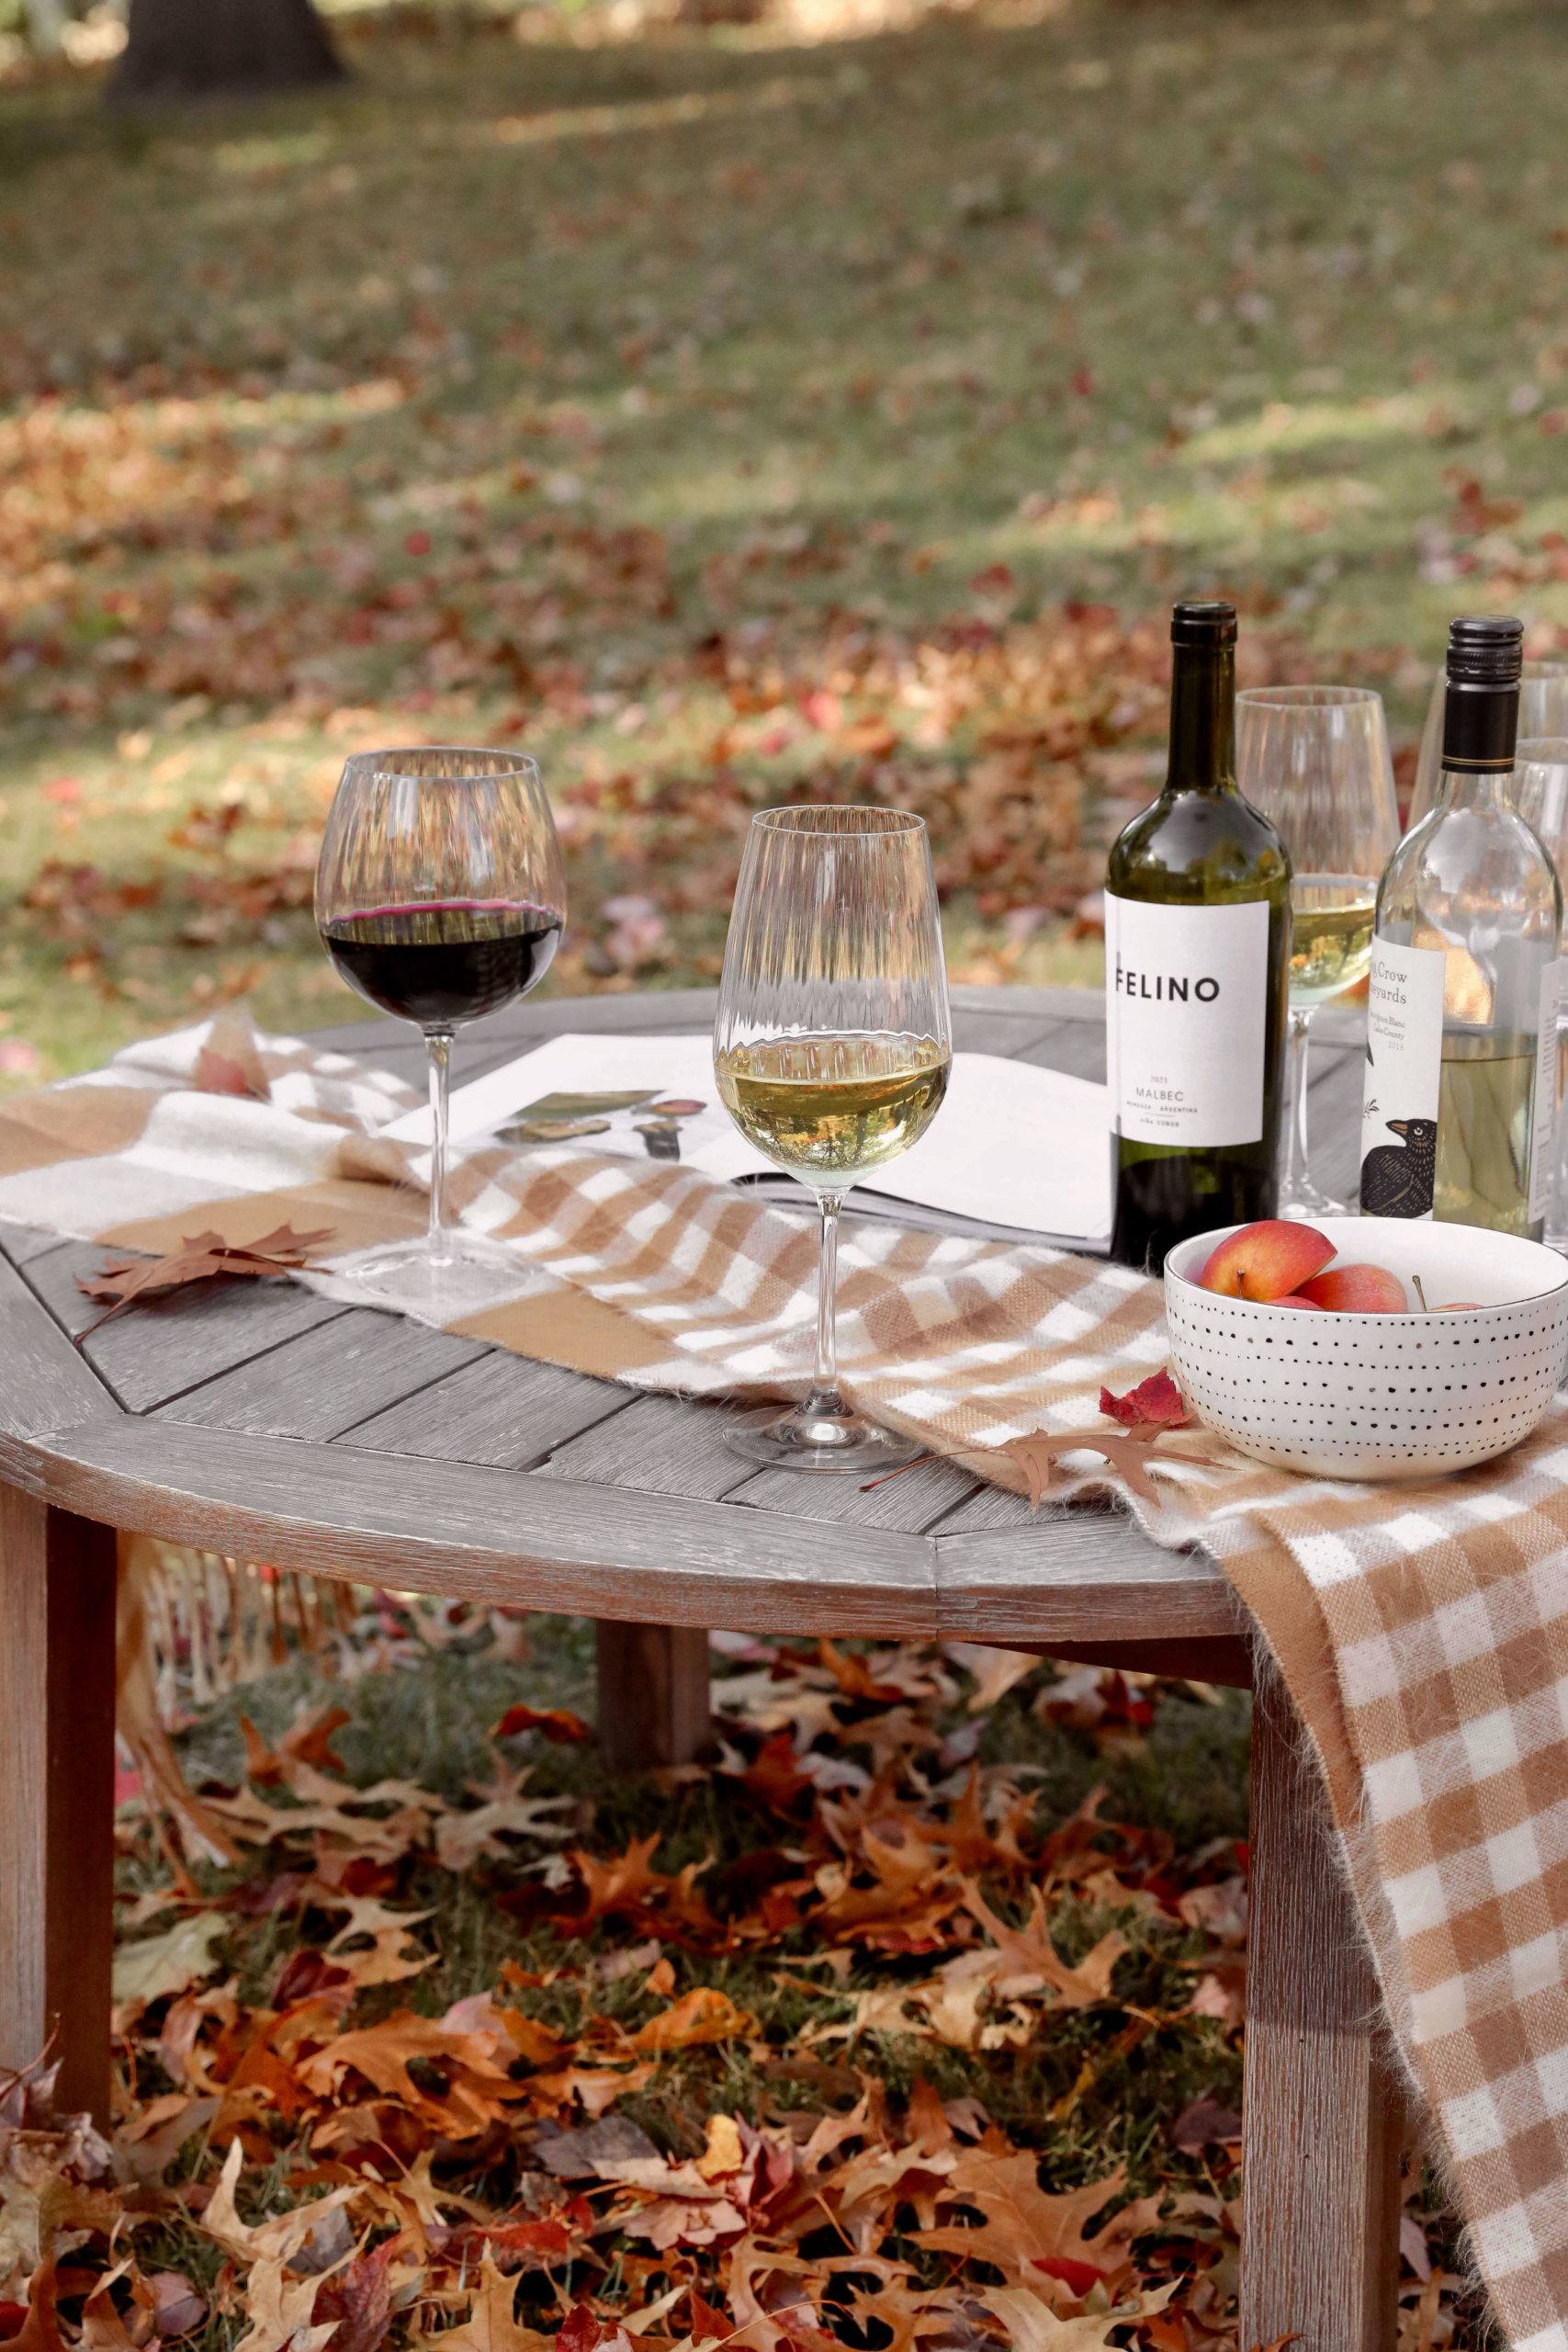 https://dailydoseofcharm.com/wp-content/uploads/2022/10/Ribbed-wine-glasses-red-white-fall-picnic-lauren-emily-lindmark-daily-dose-of-charm--scaled.jpg